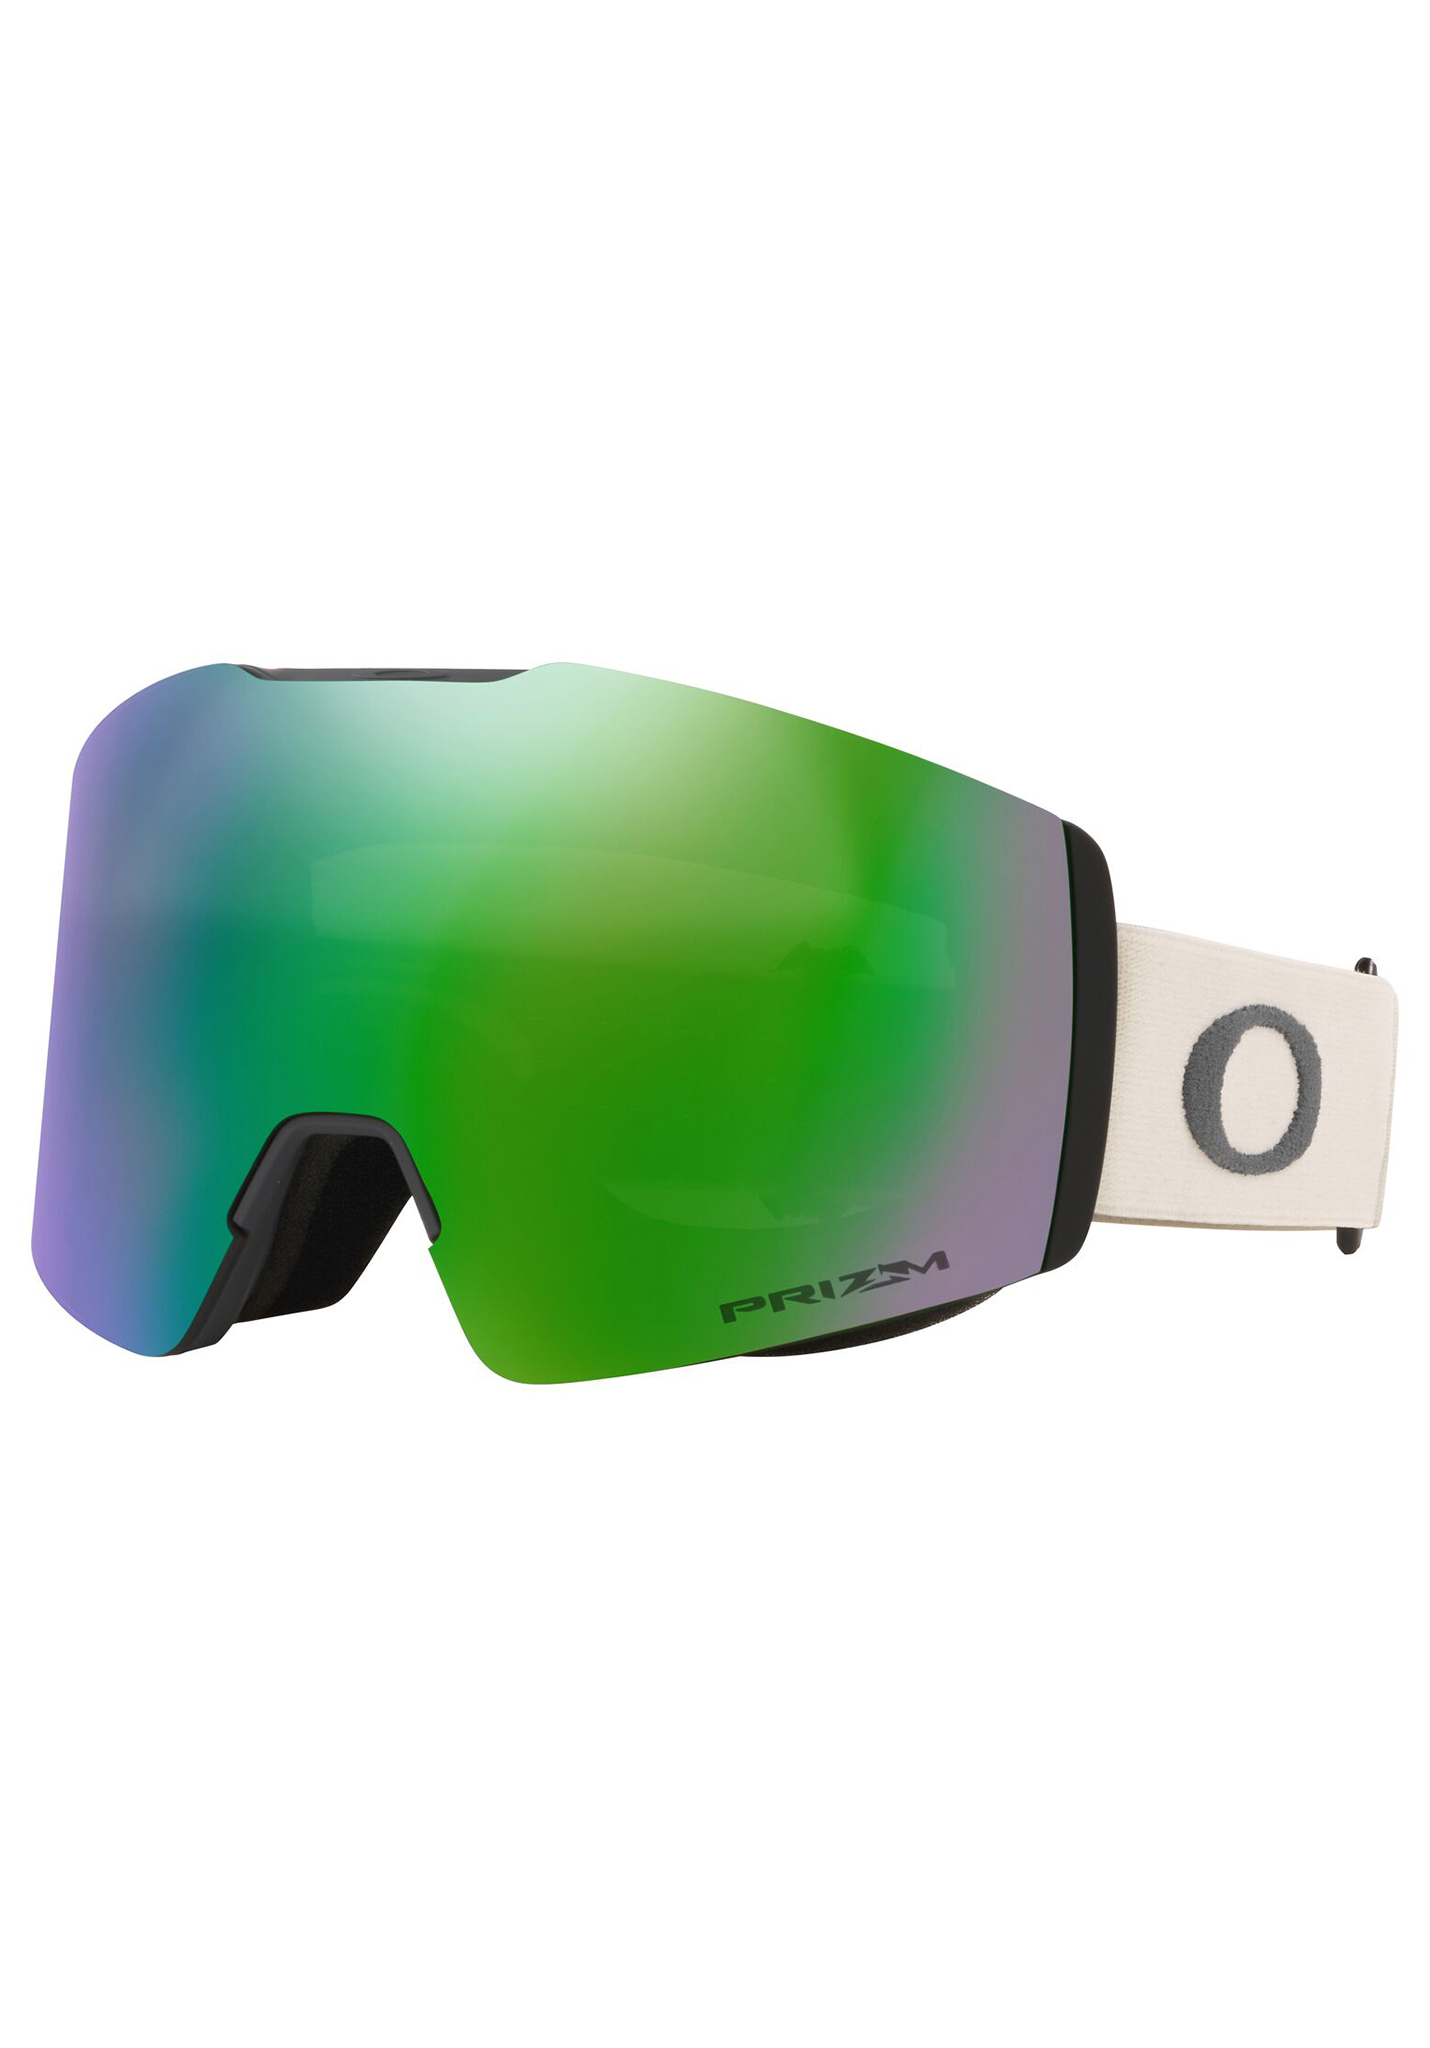 Oakley Fall Line XM Snowboardbrillen dunkelgrau/prizm jade iridium One Size